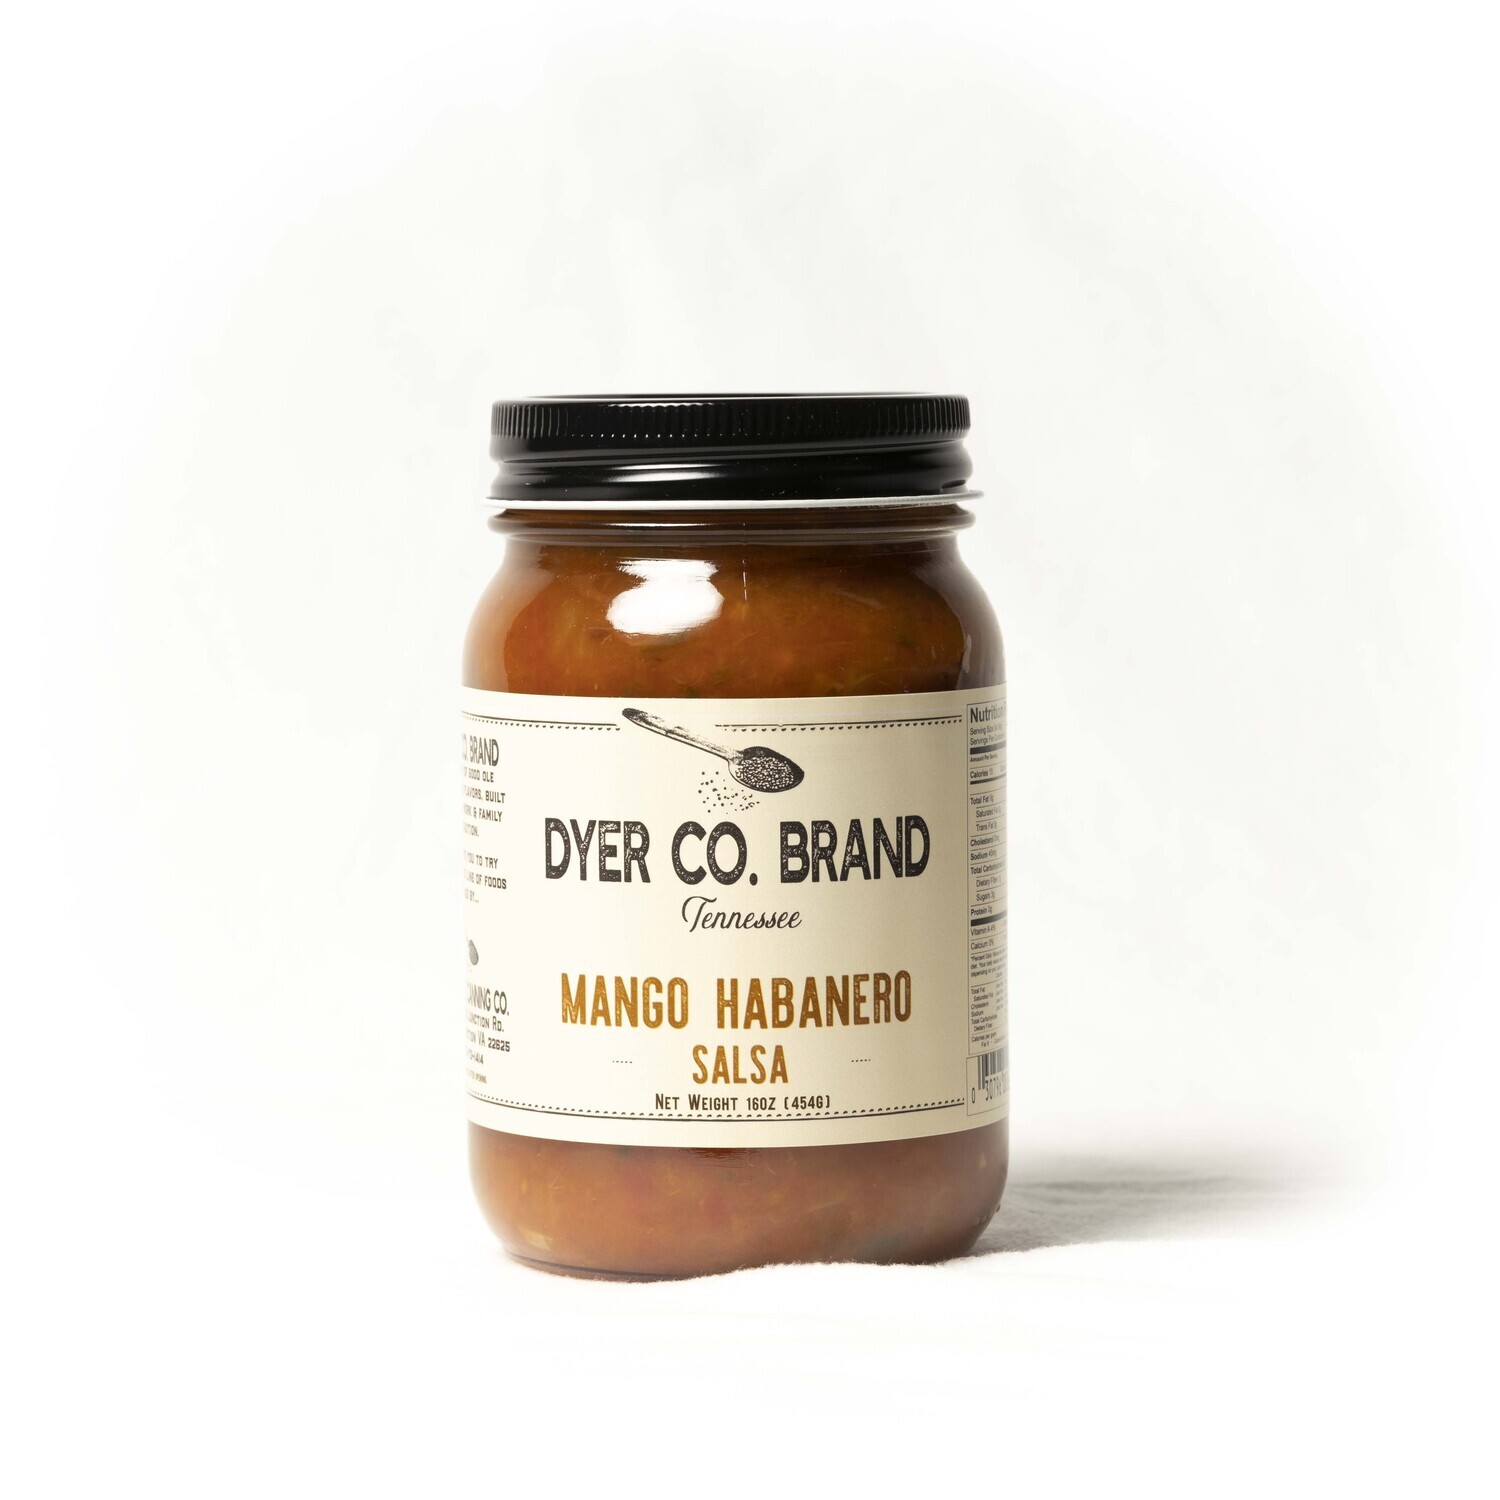 Dyer Co Brand Mango Habanero Salsa